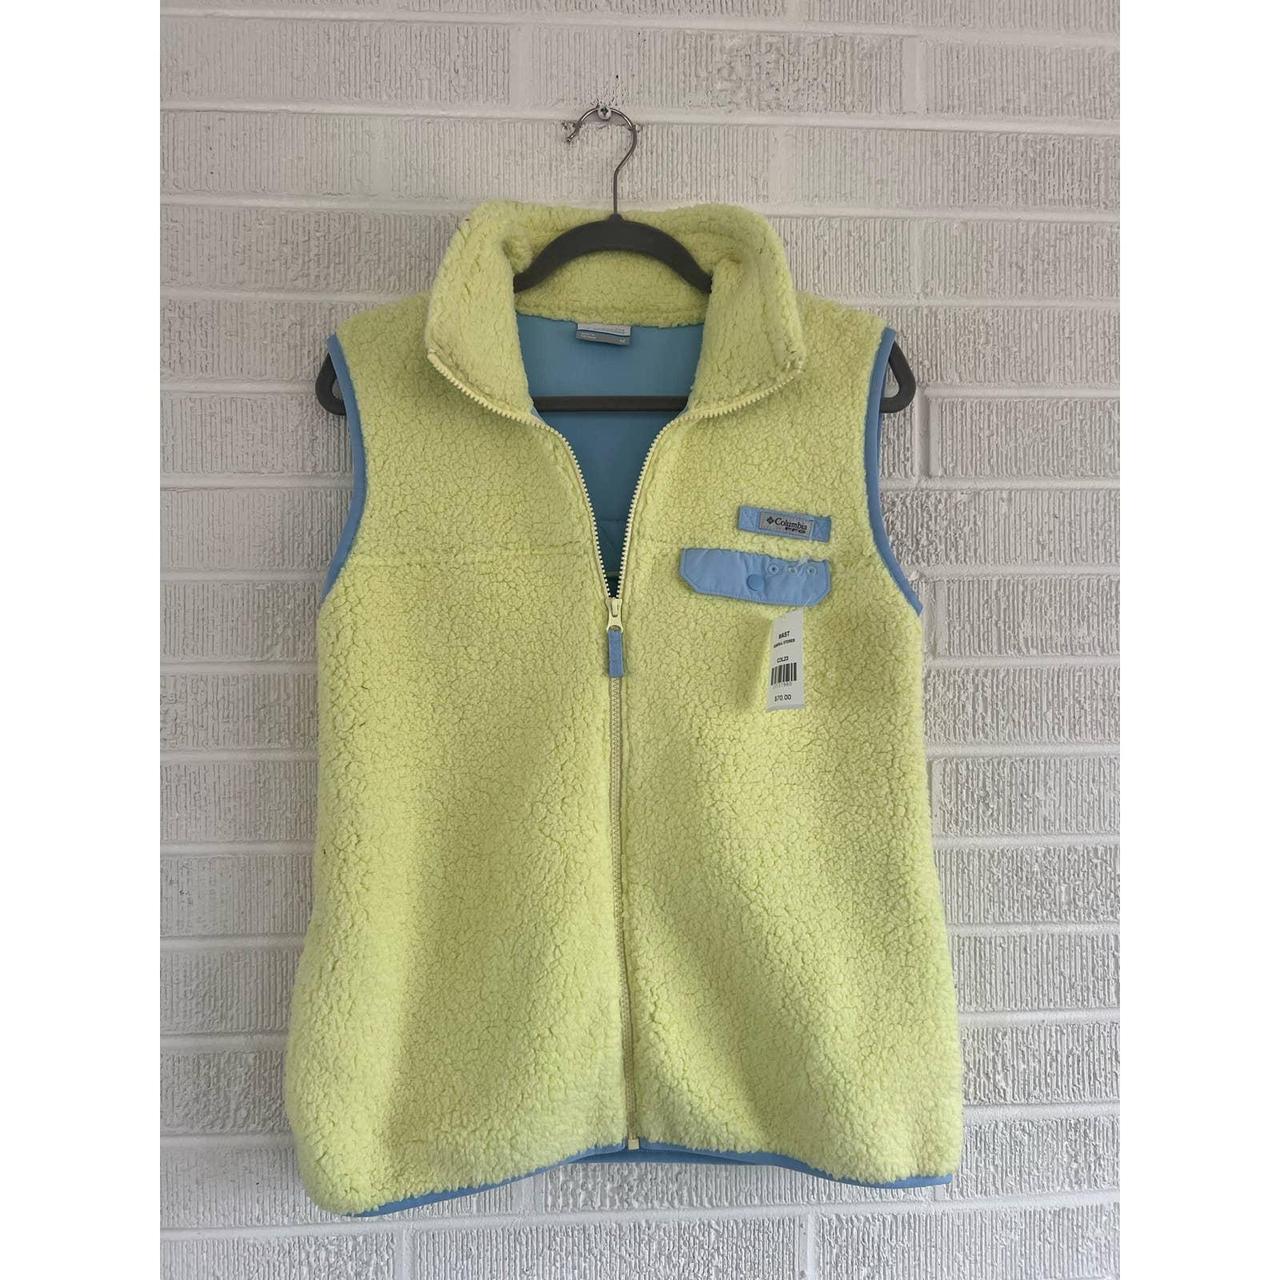 Patagonia Kids' Retro-X® Fleece Vest